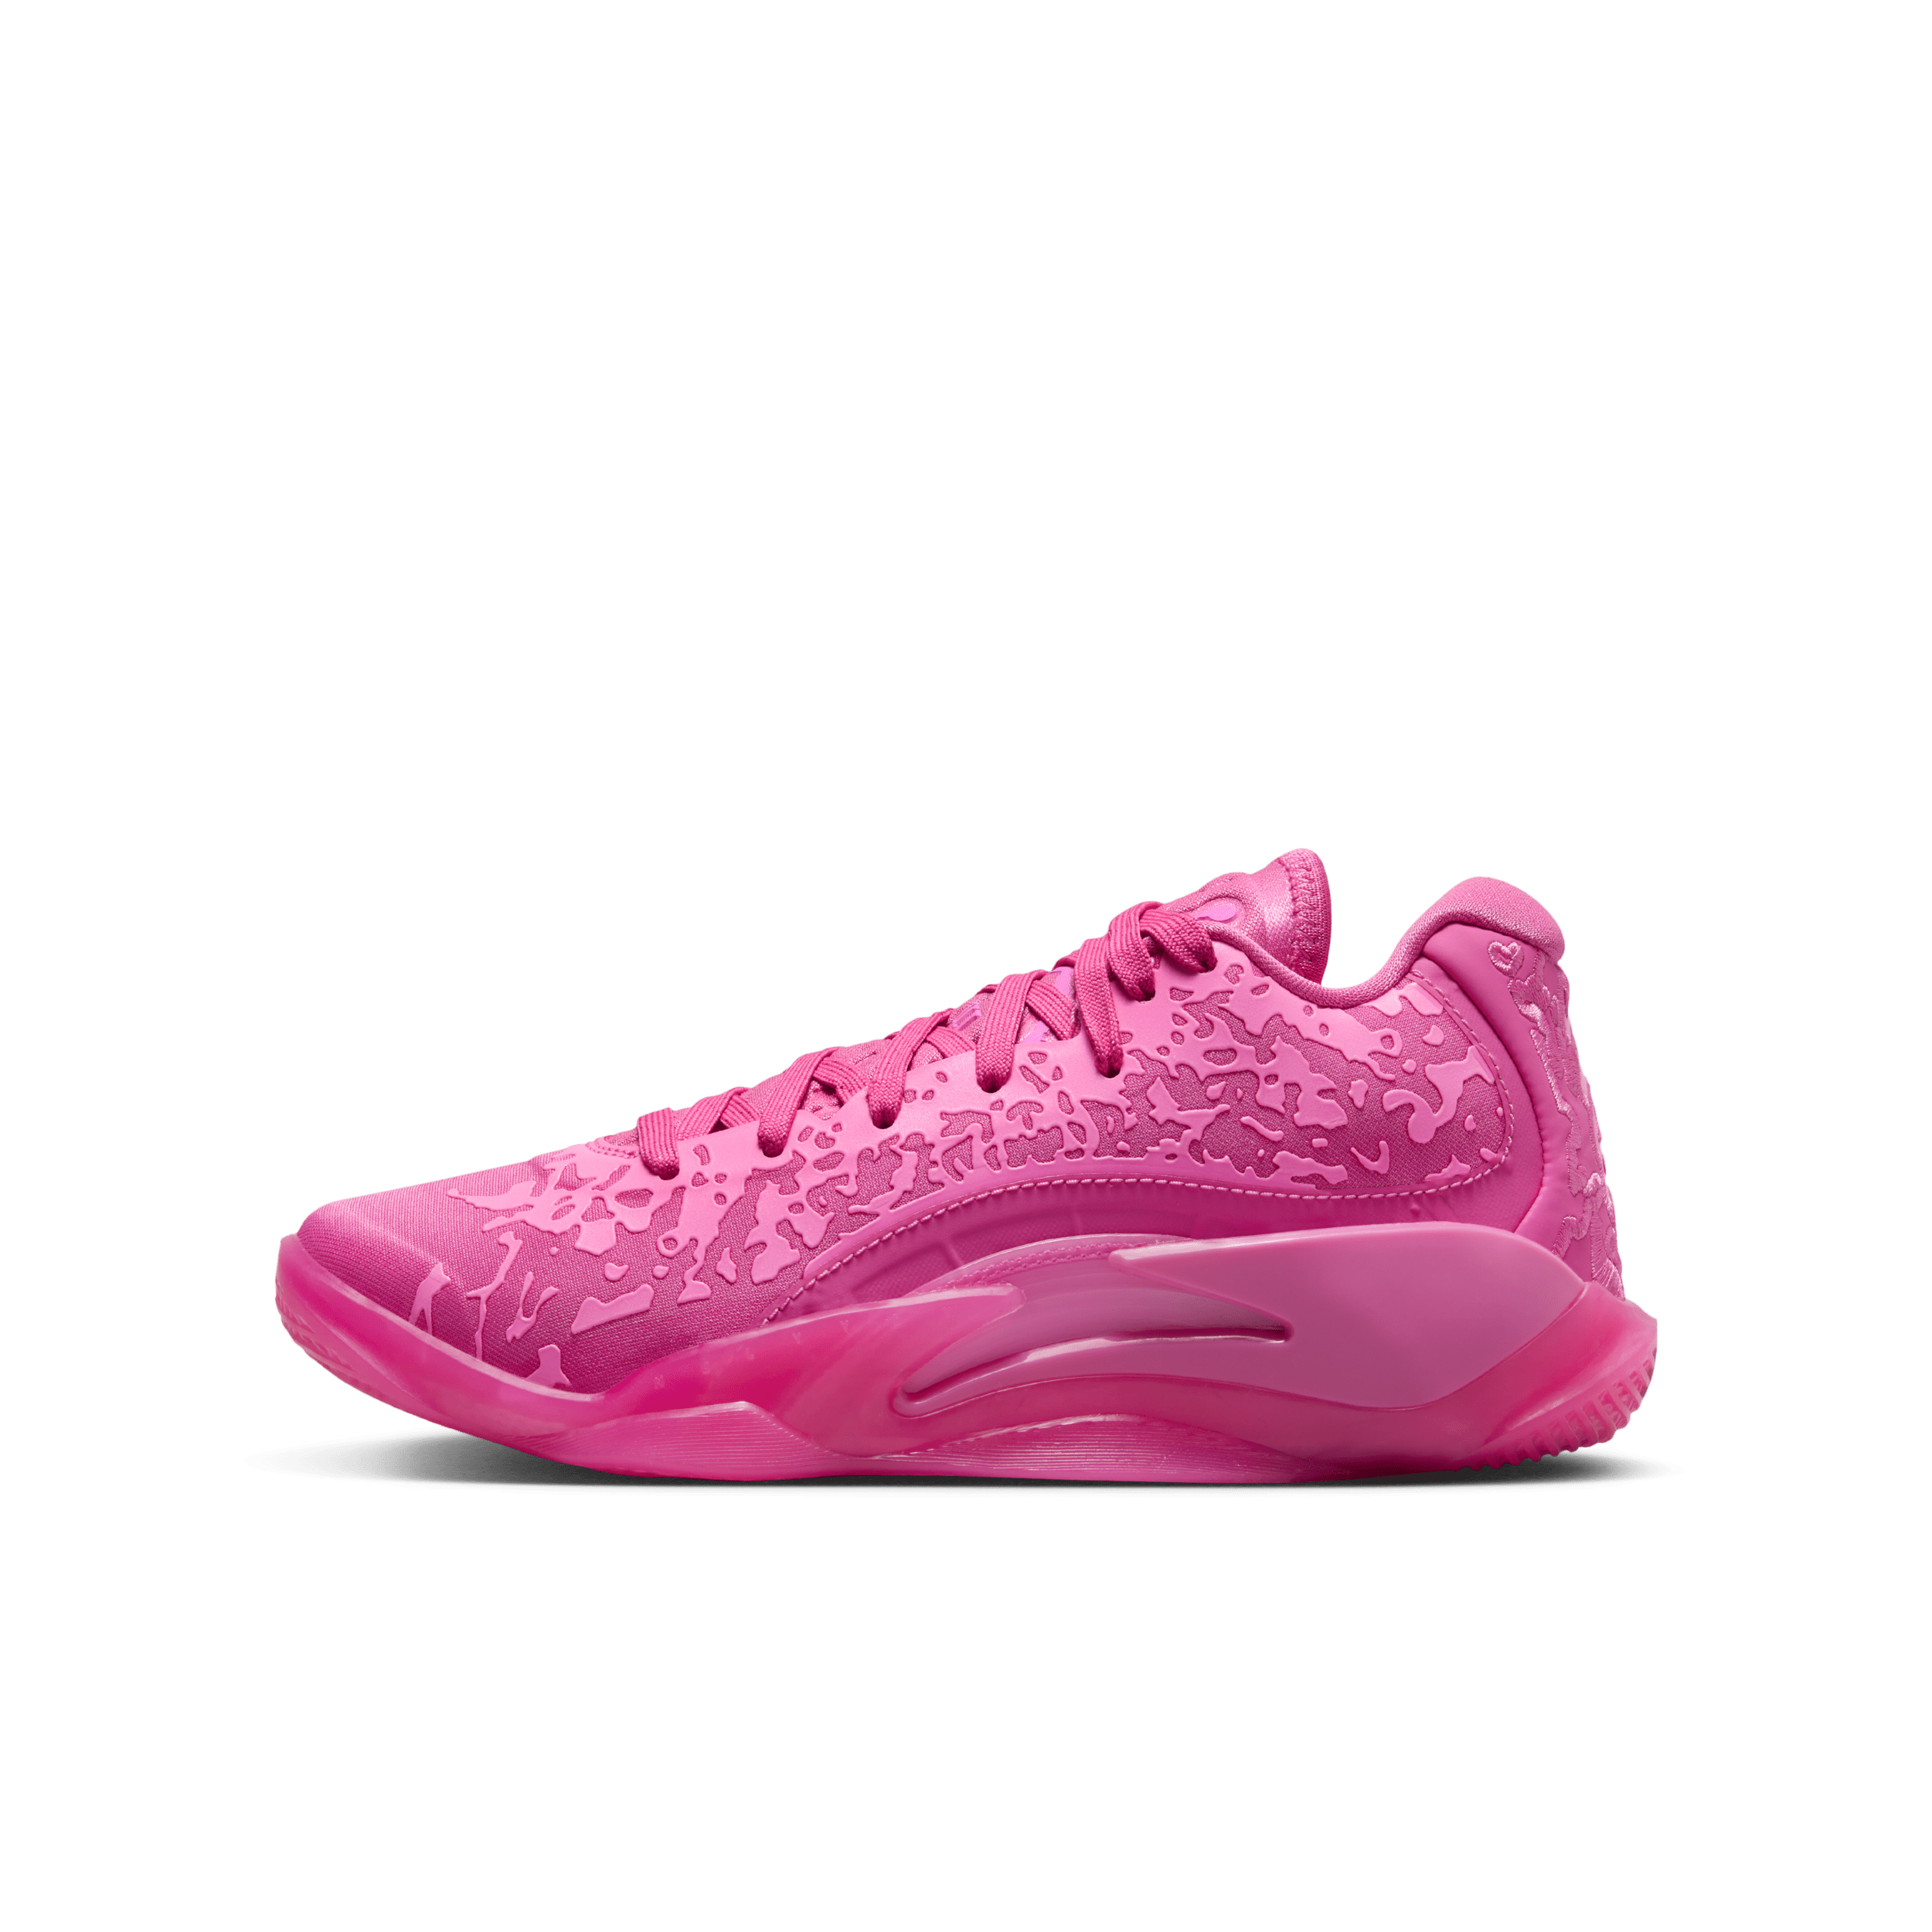 Nike Zion 3 basketbalschoenen voor kids - Roze